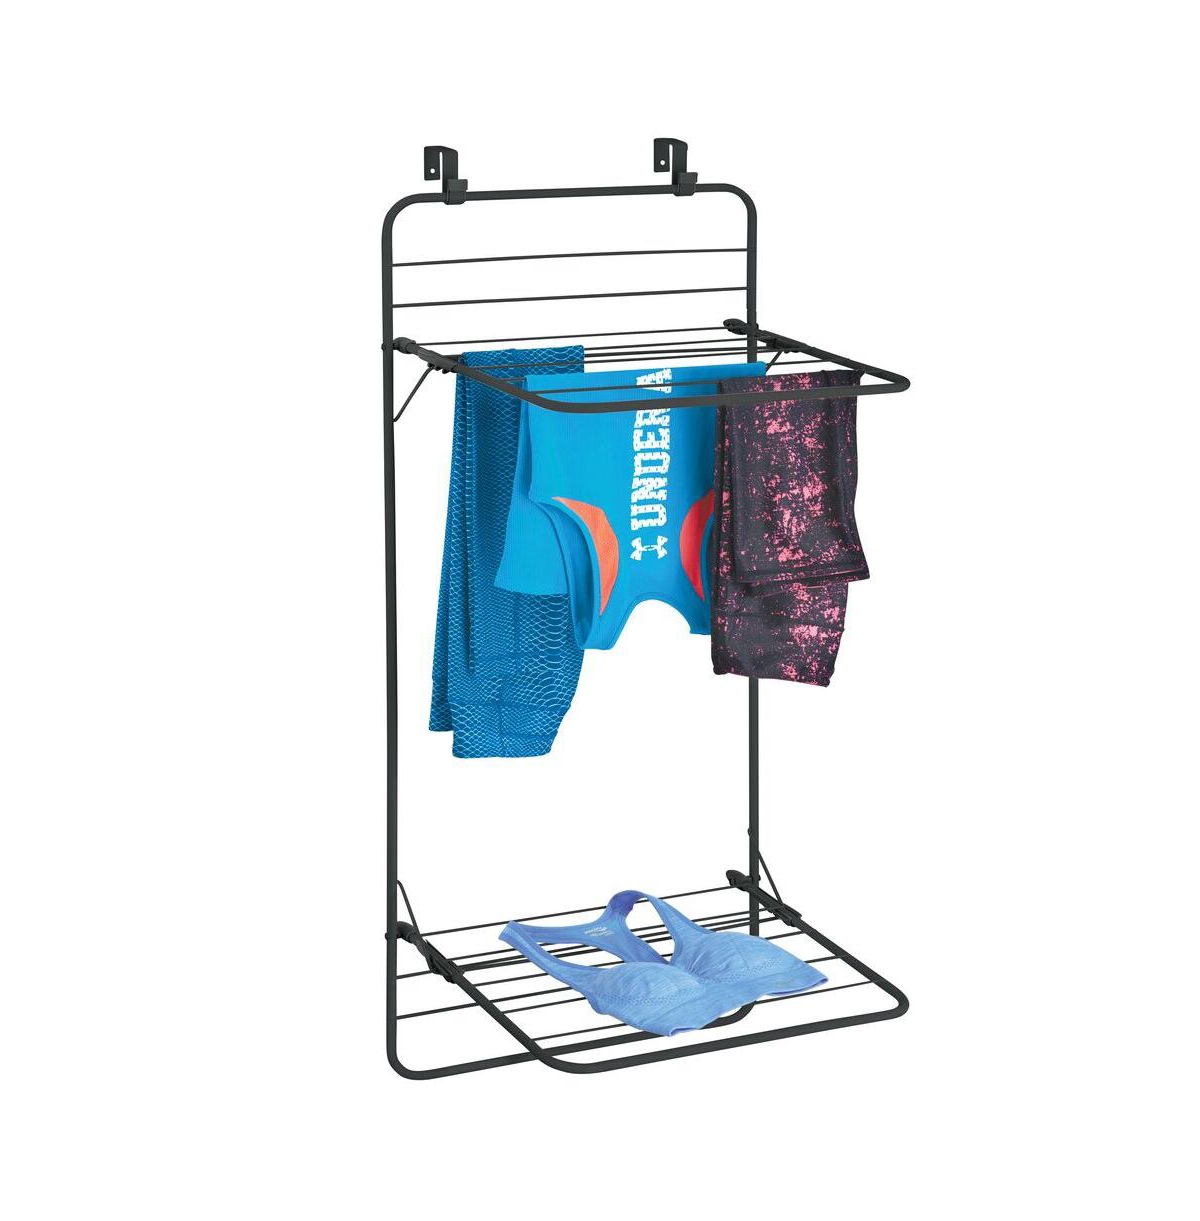 Collapsible Foldable Laundry Drying Rack, 2 Shelves - Black